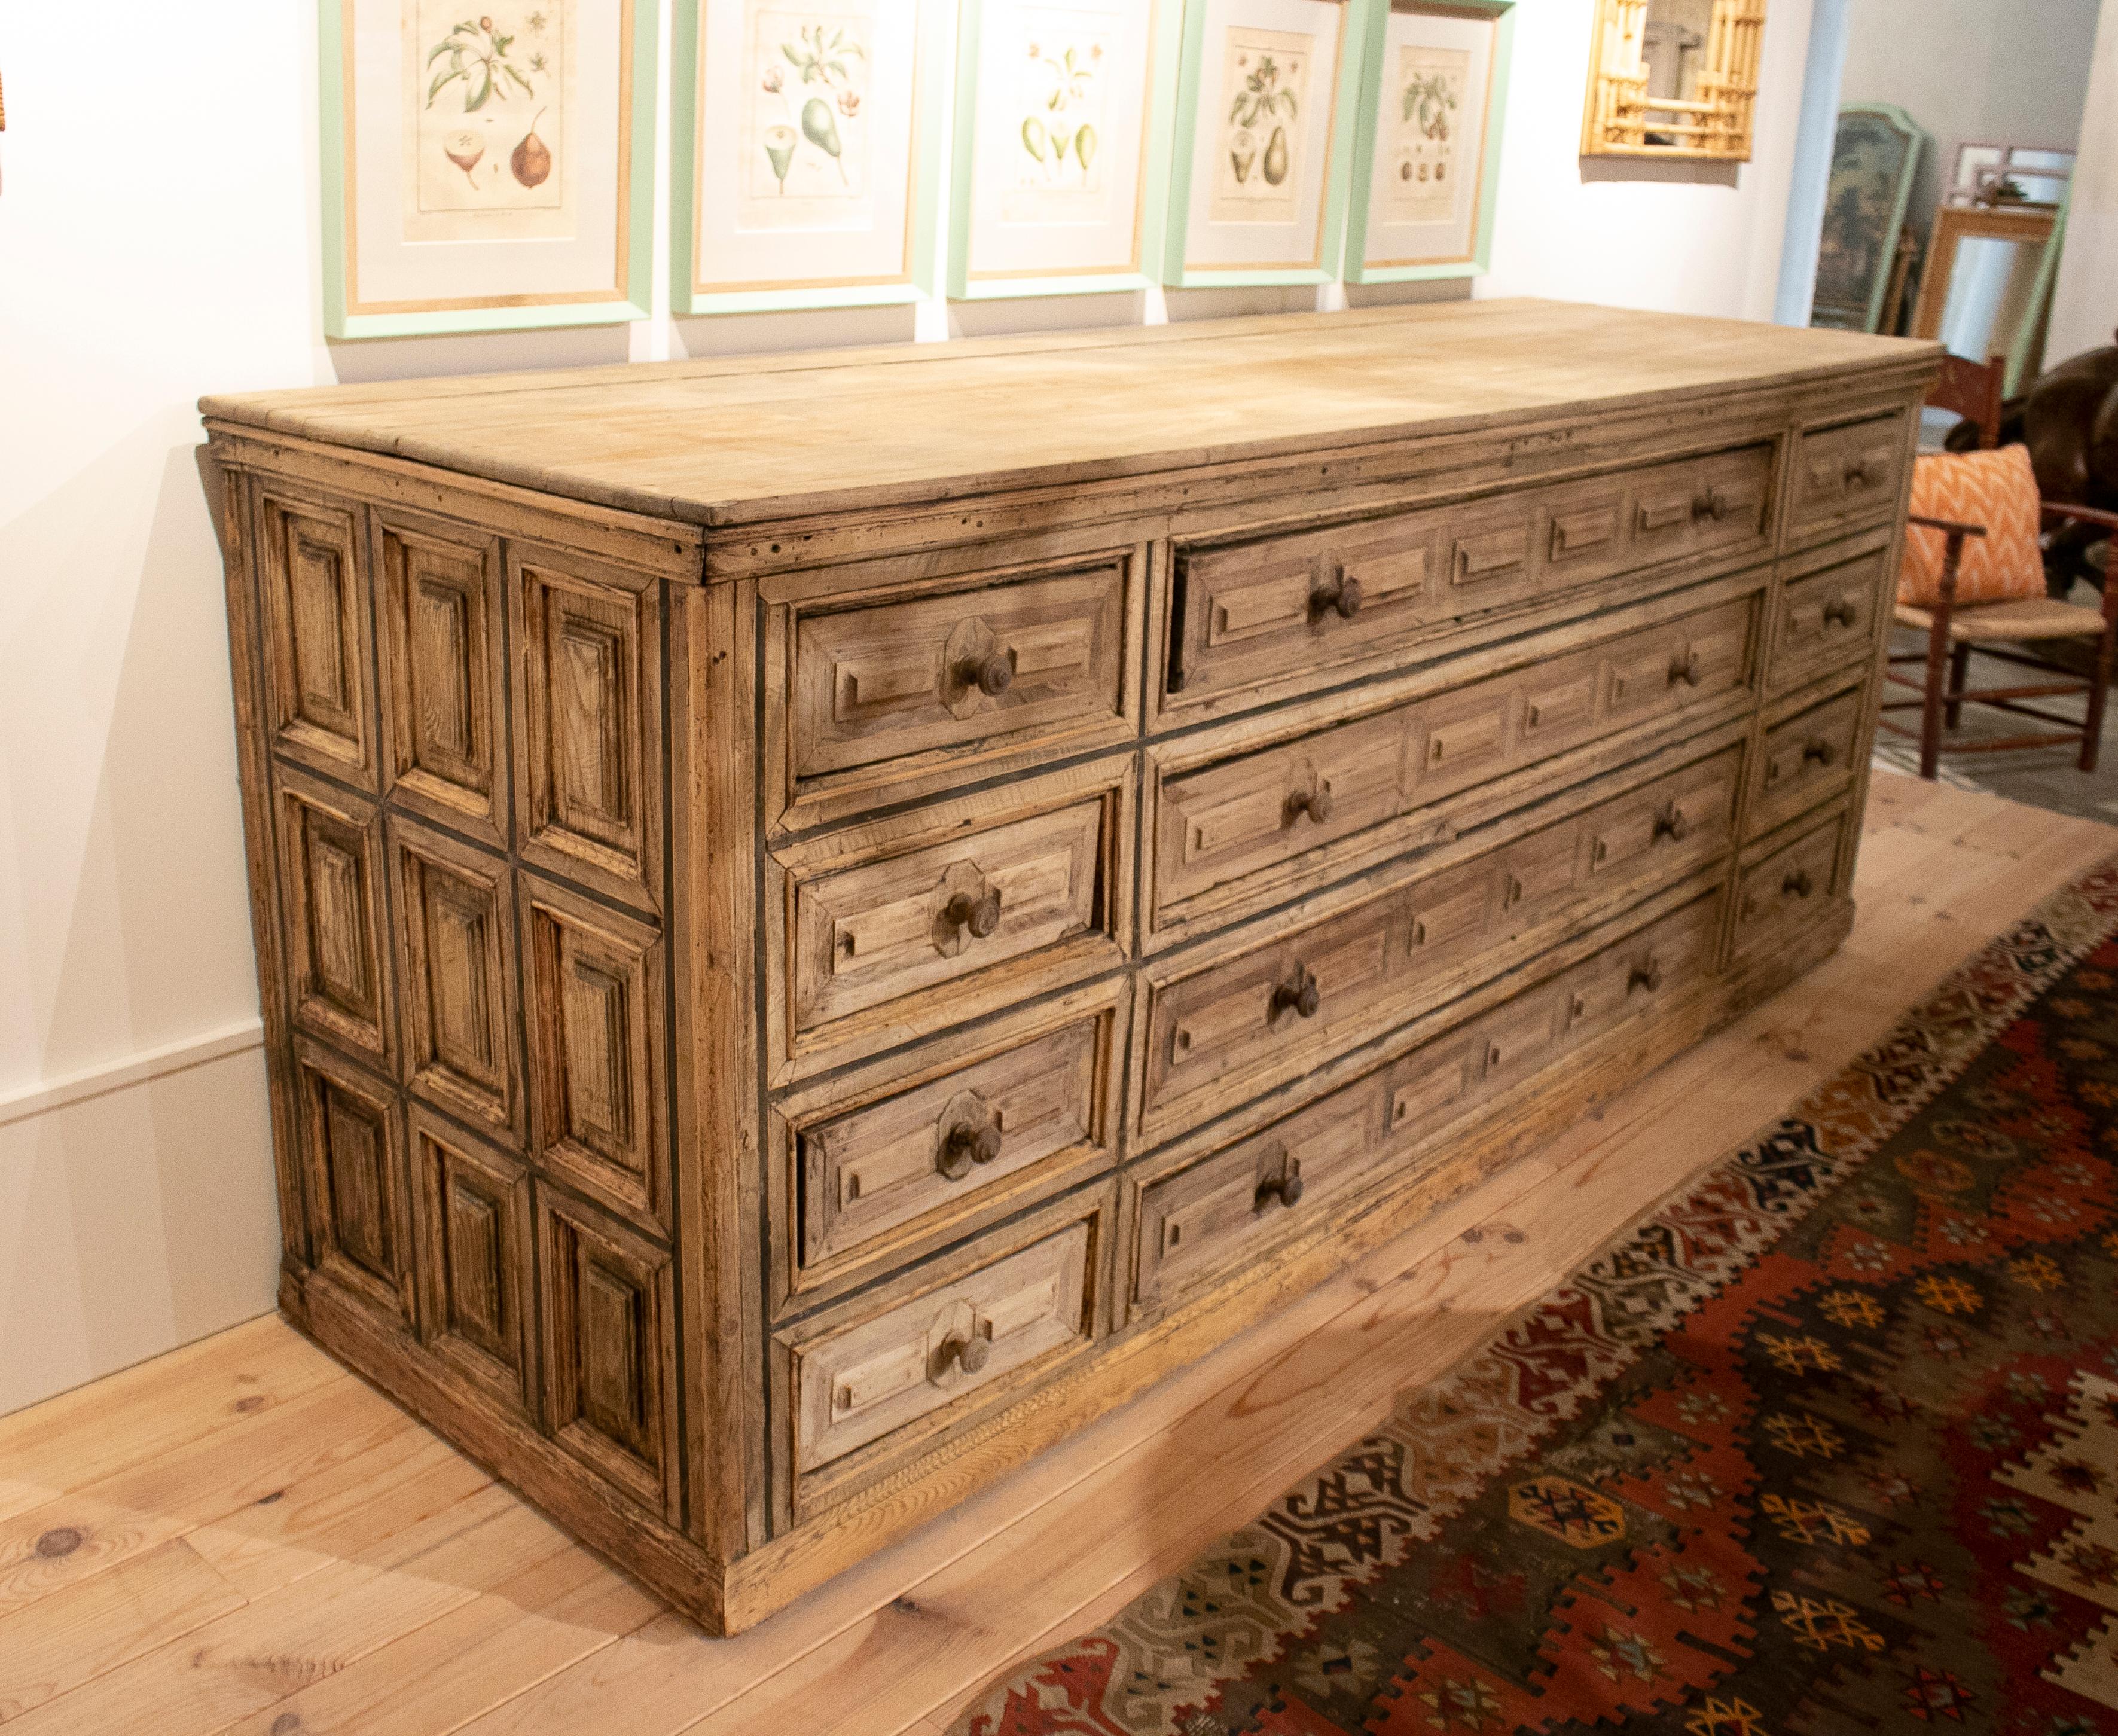 18th century Spanish twelve drawer panelled chest.